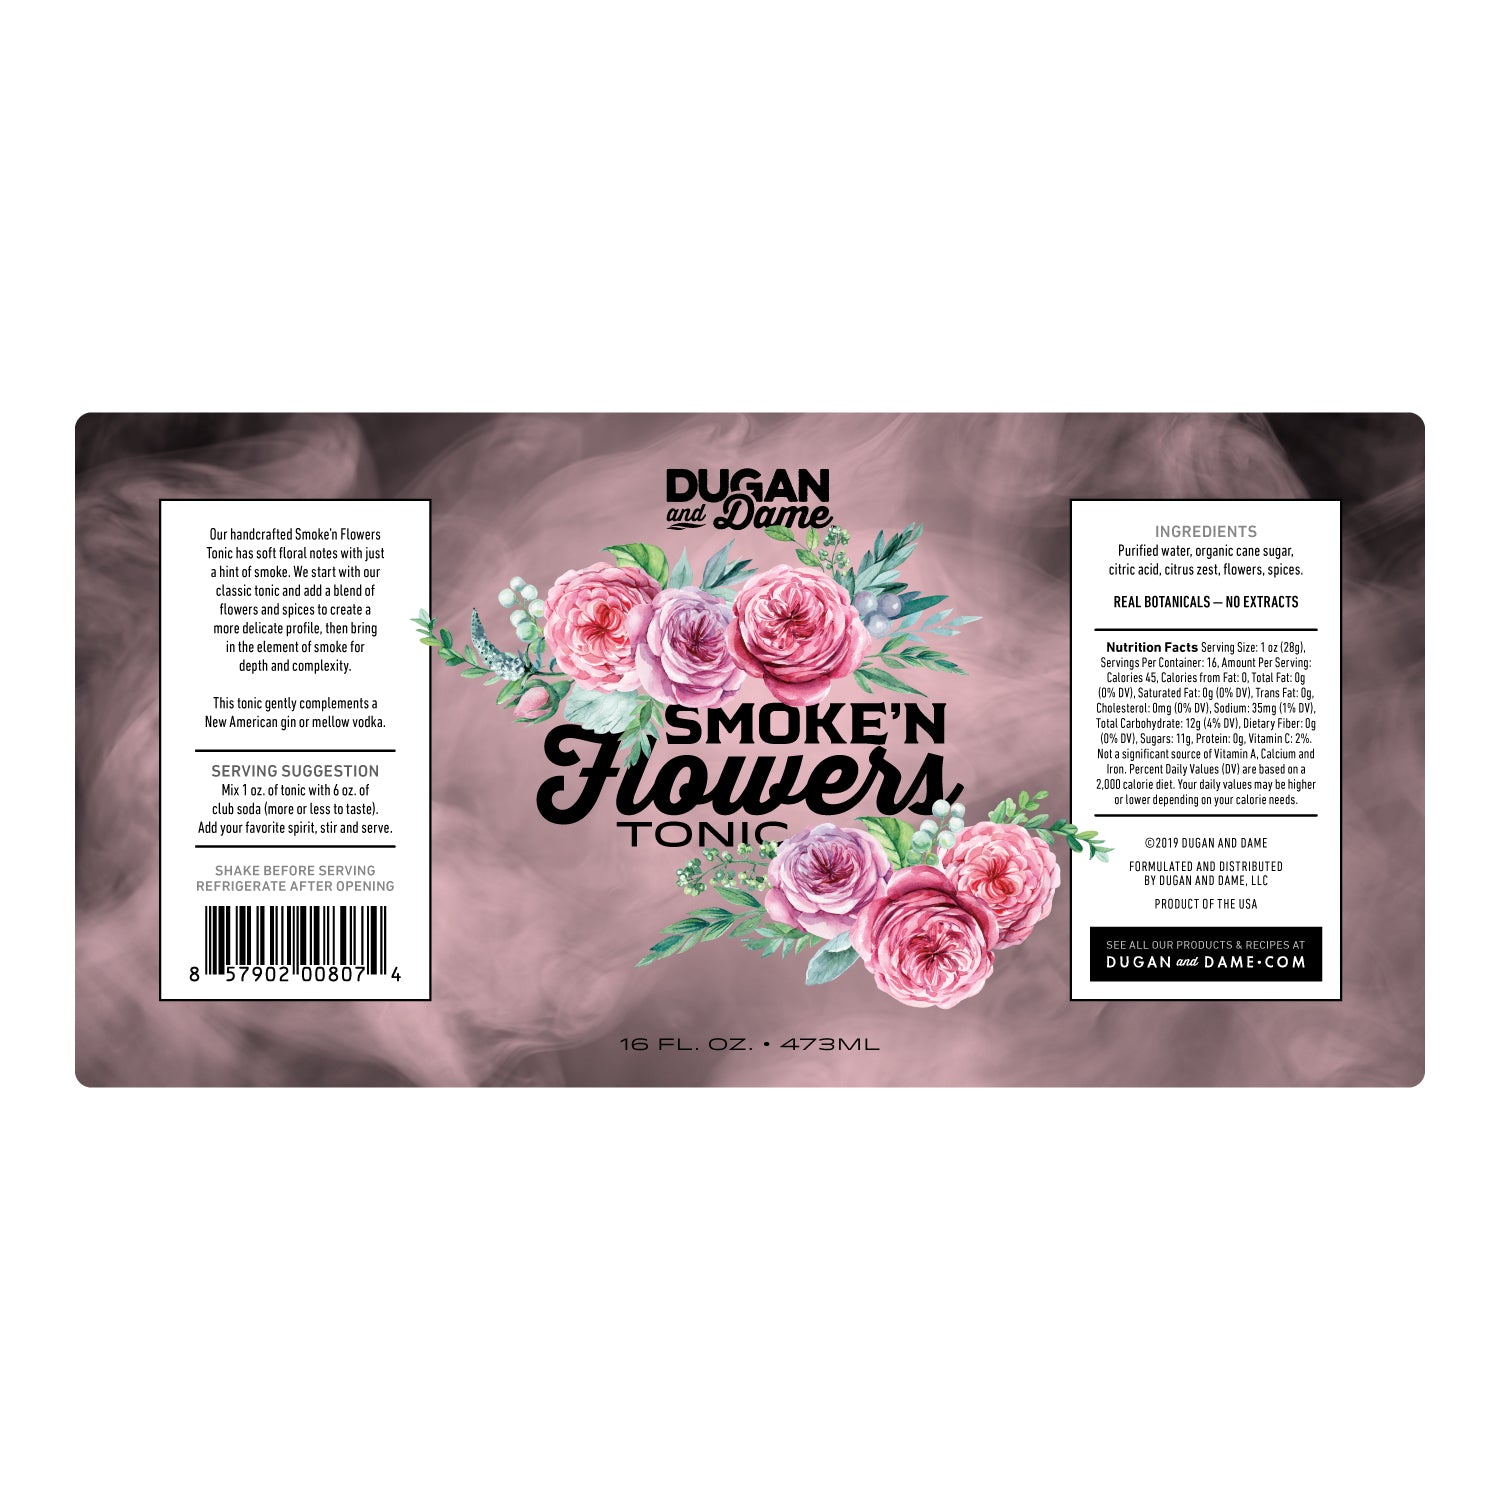 Dugan and Dame Smoke'n Flowers Tonic Label